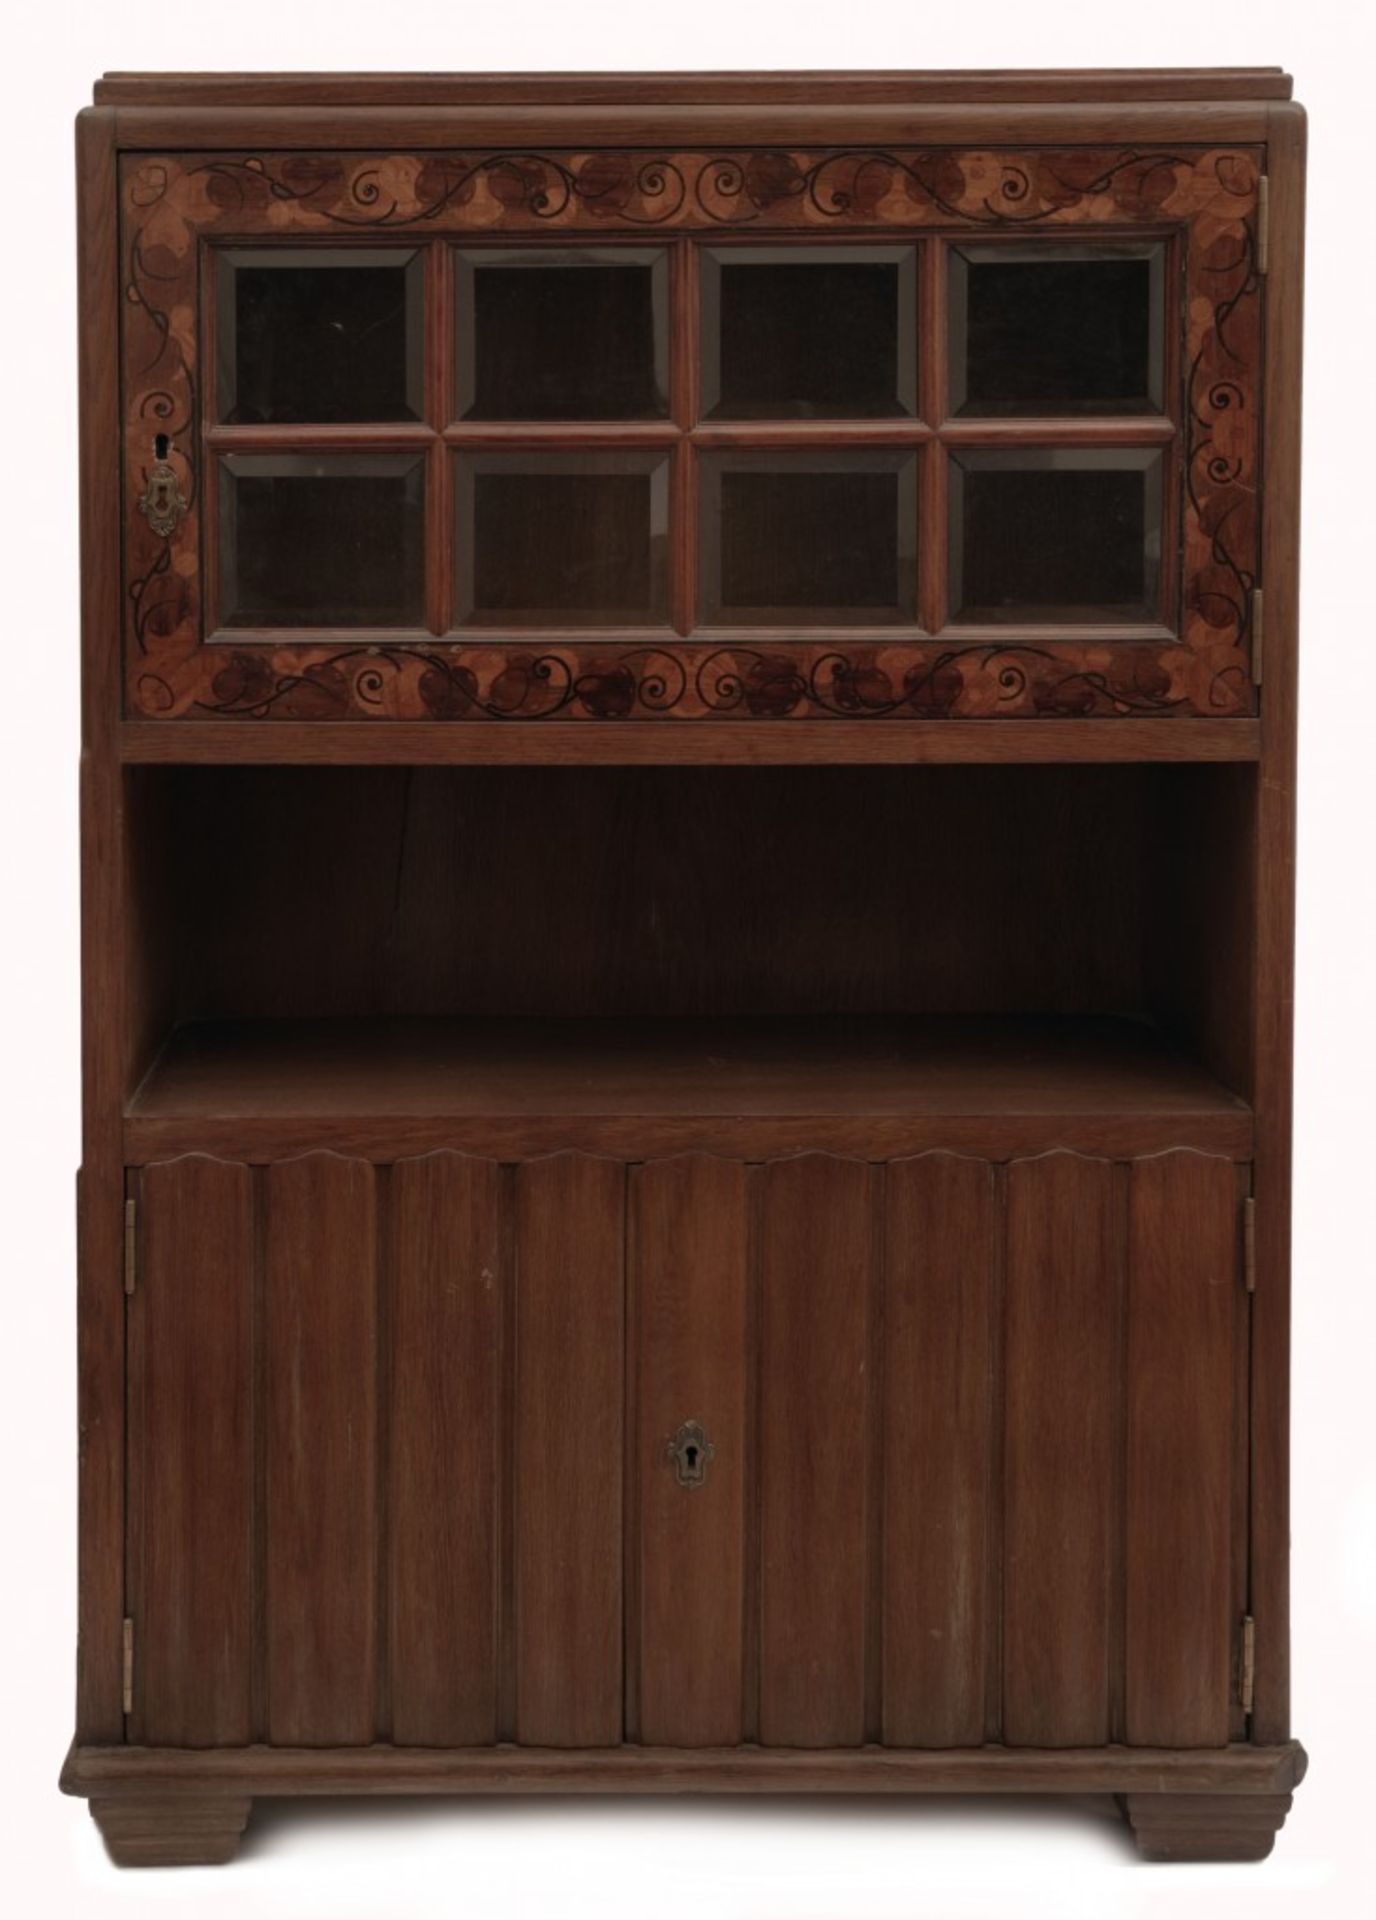 An Art Nouveau Display Cabinet